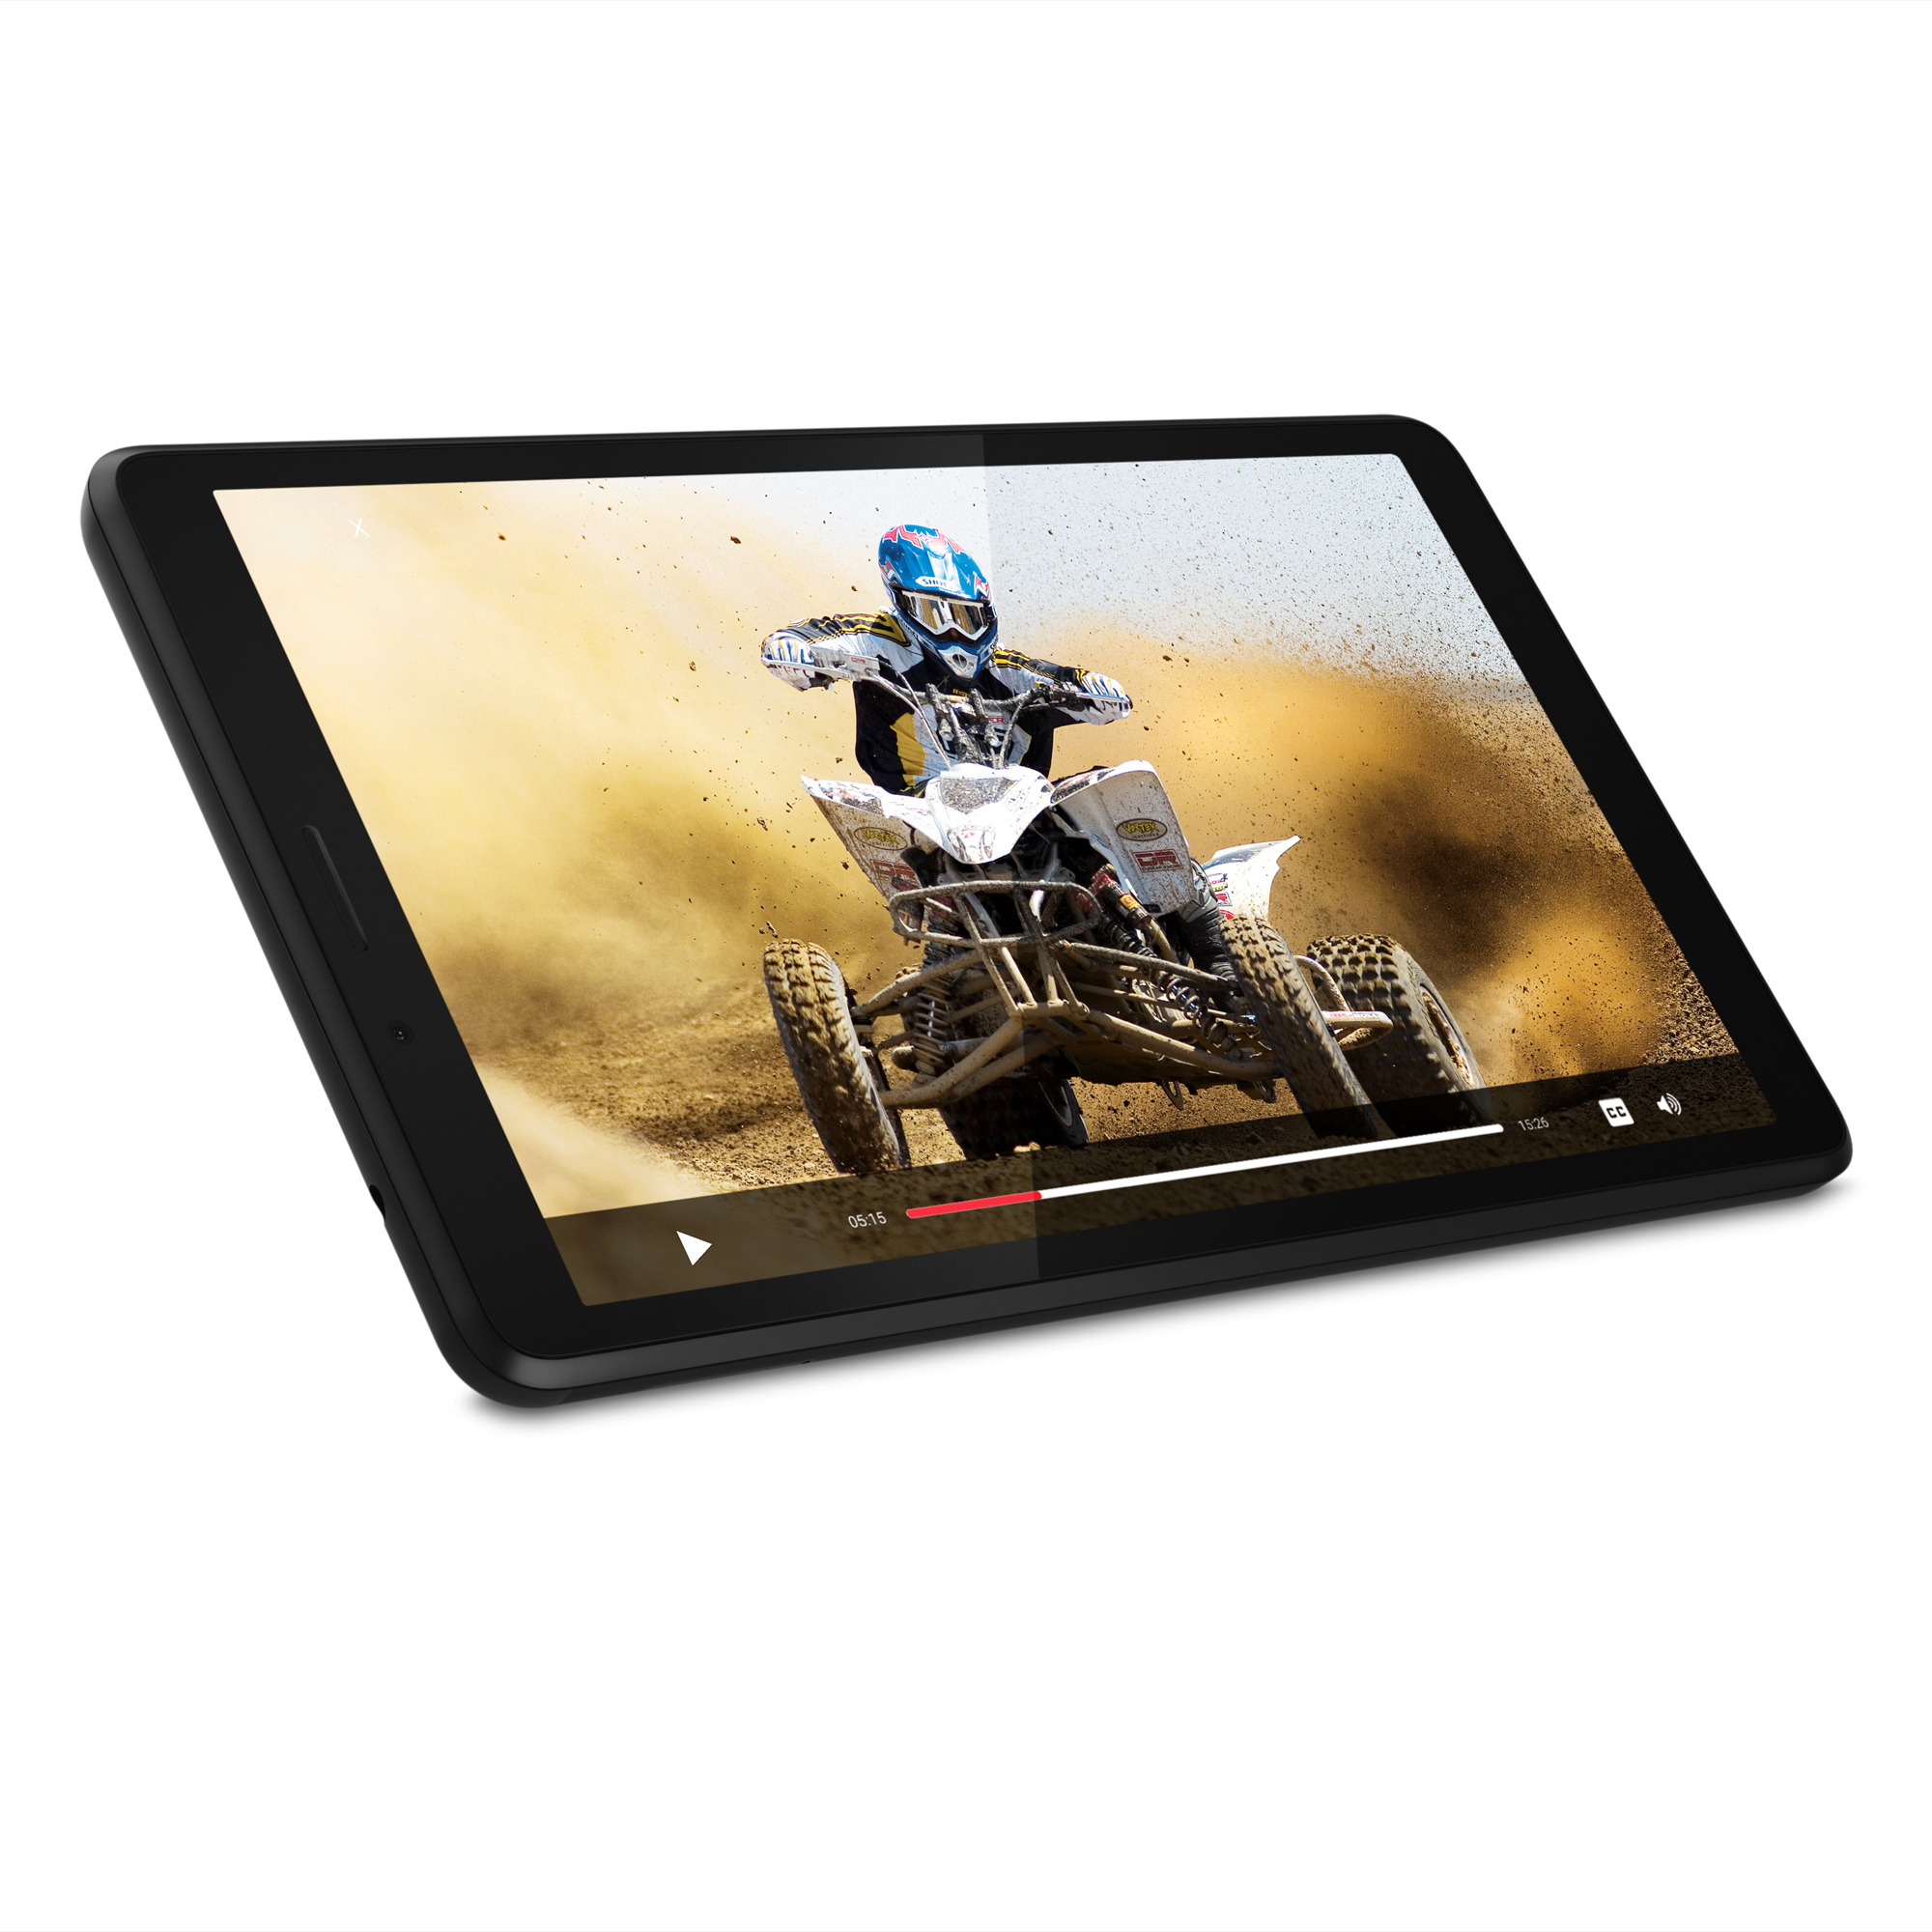 Lenovo Tab M7 7" Tablet, 16GB Storage, 1GB Memory, 1.3GHz Quad-Core Processor, Android 9 Pie Go Edition, HD Display - image 2 of 8